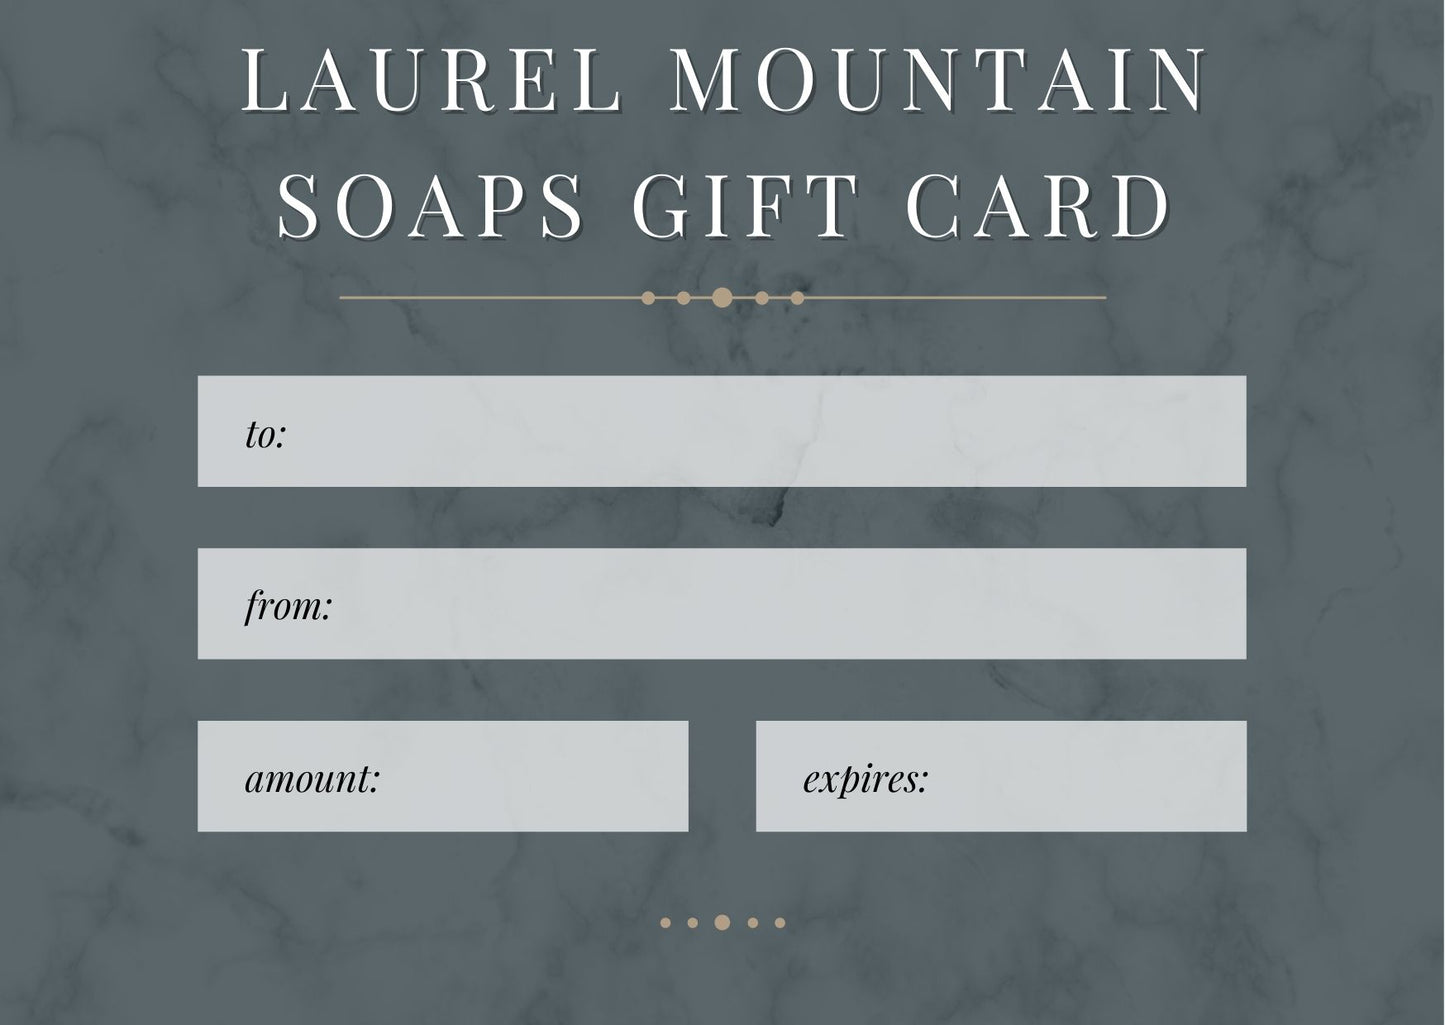 Laurel Mountain Soaps Gift Card